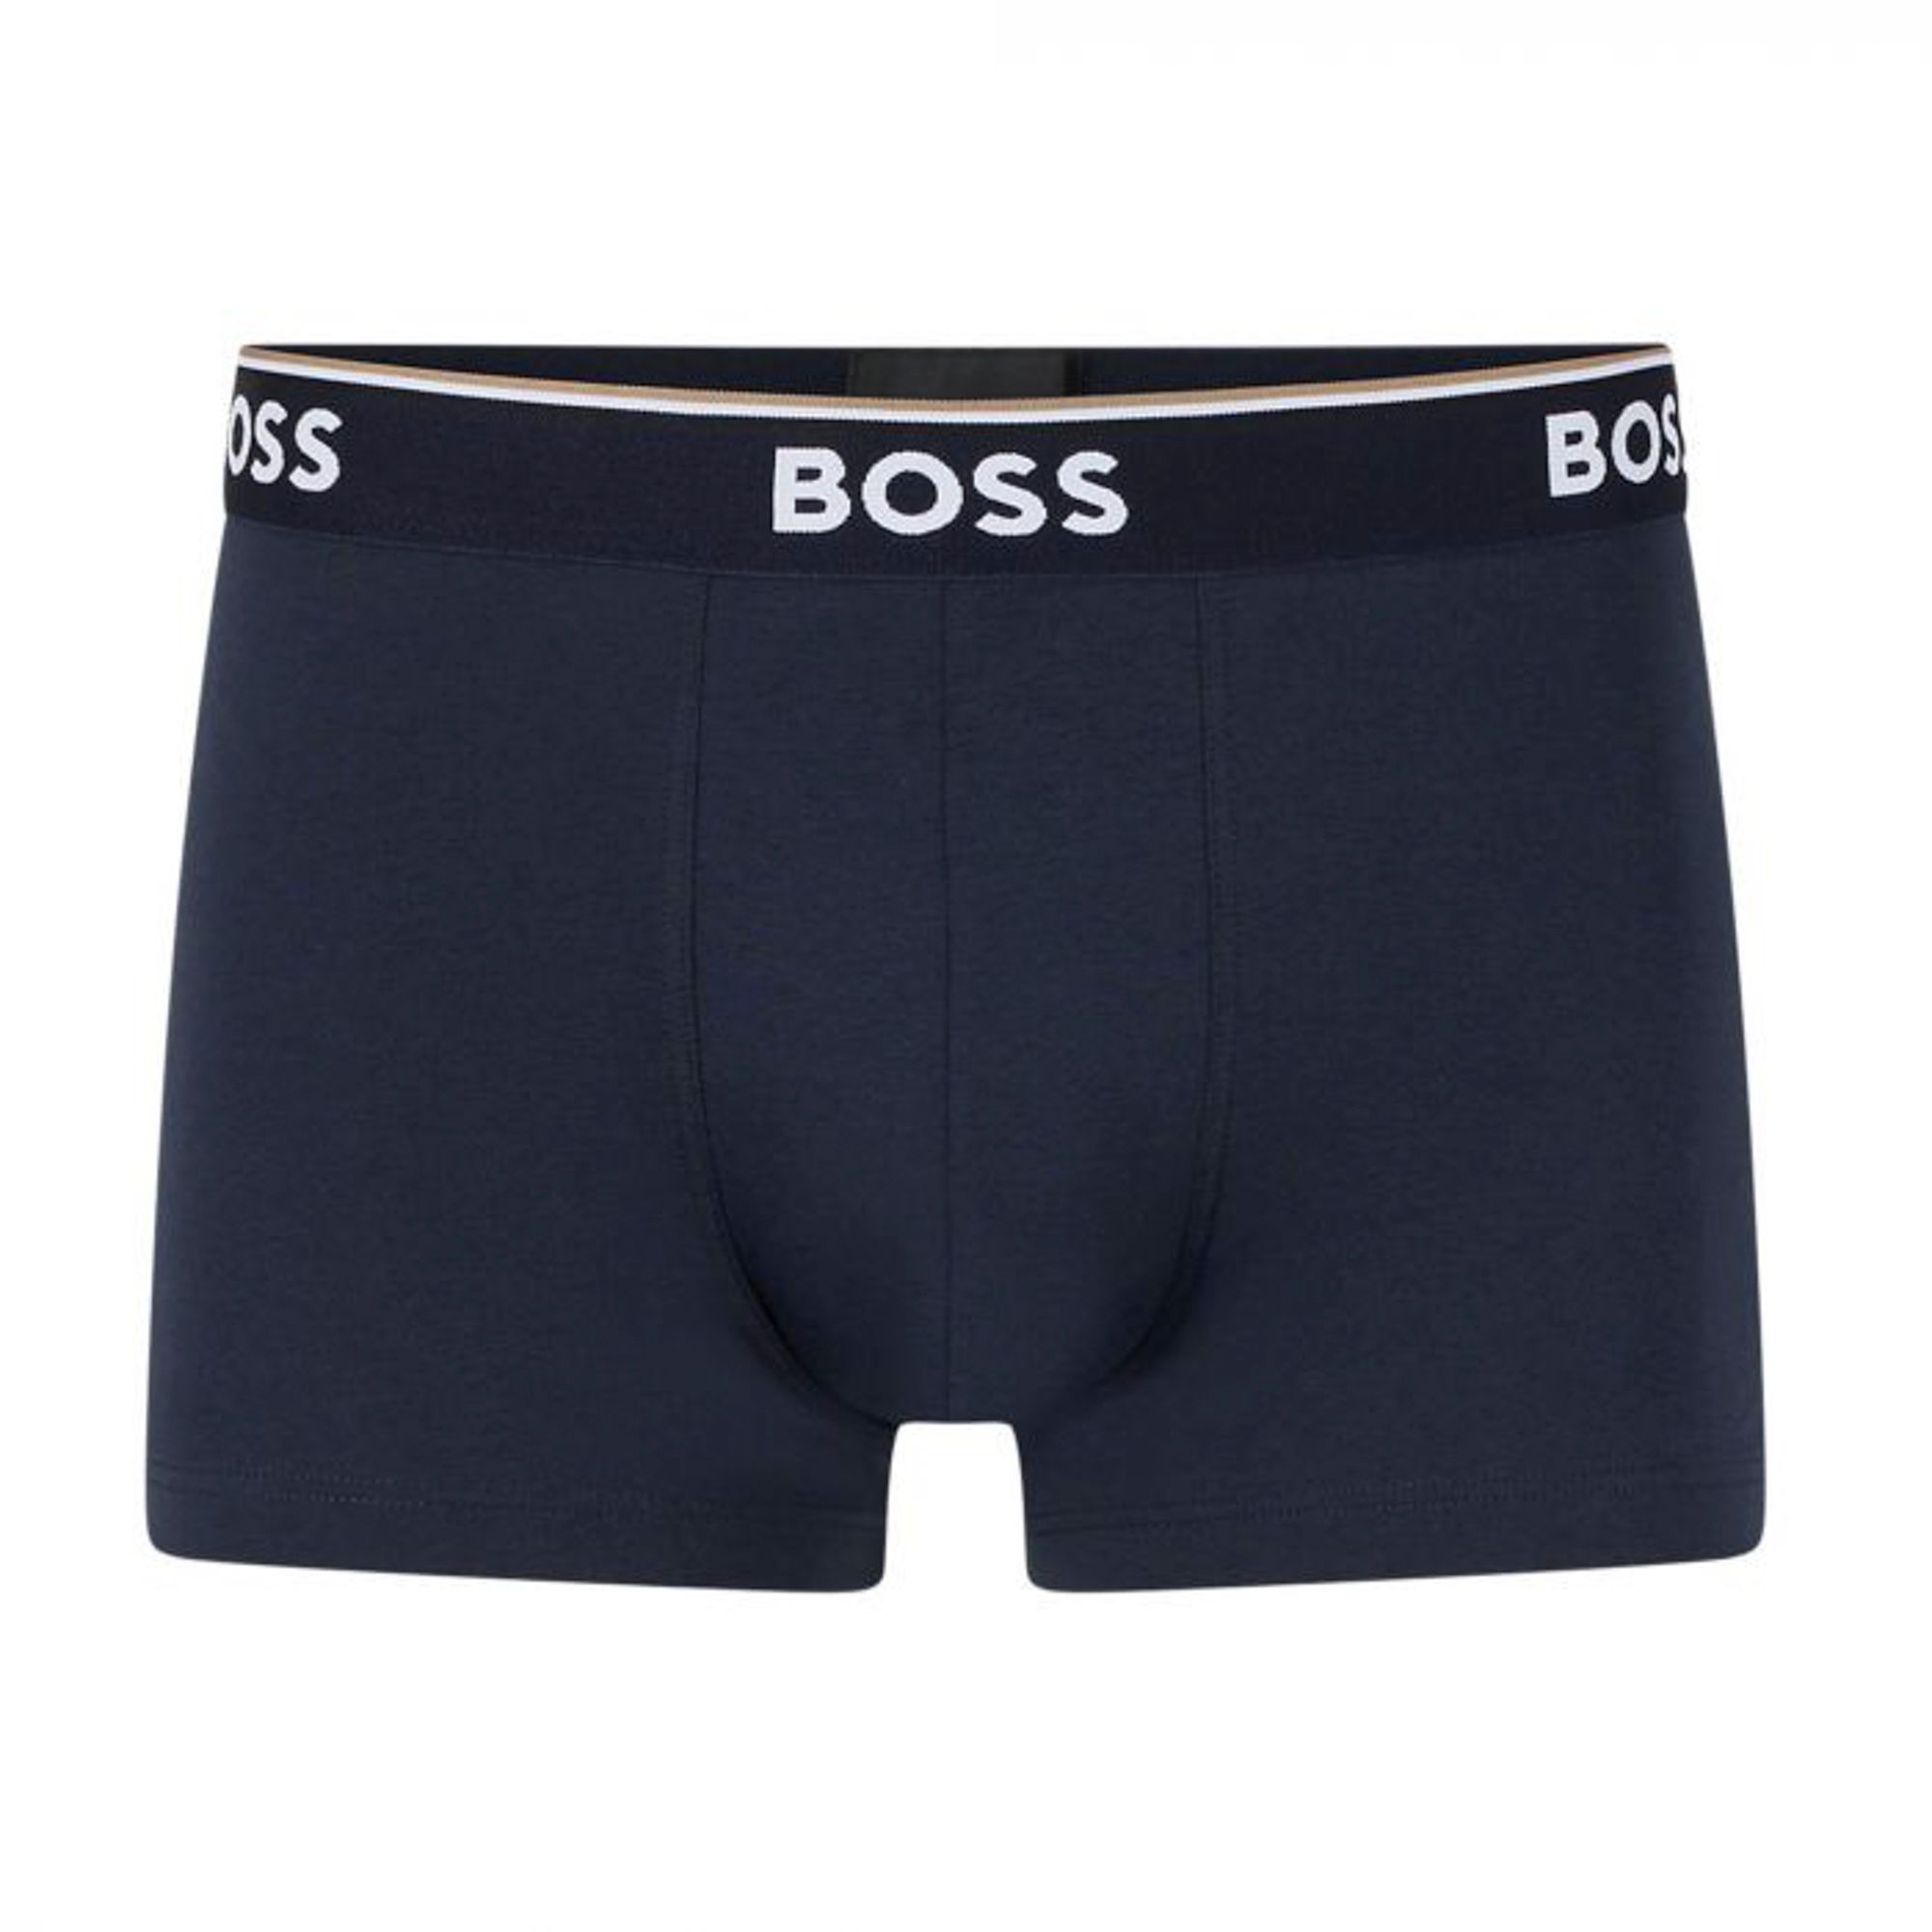 Boss Boxershort 3-pack Blauw 082272-002-L